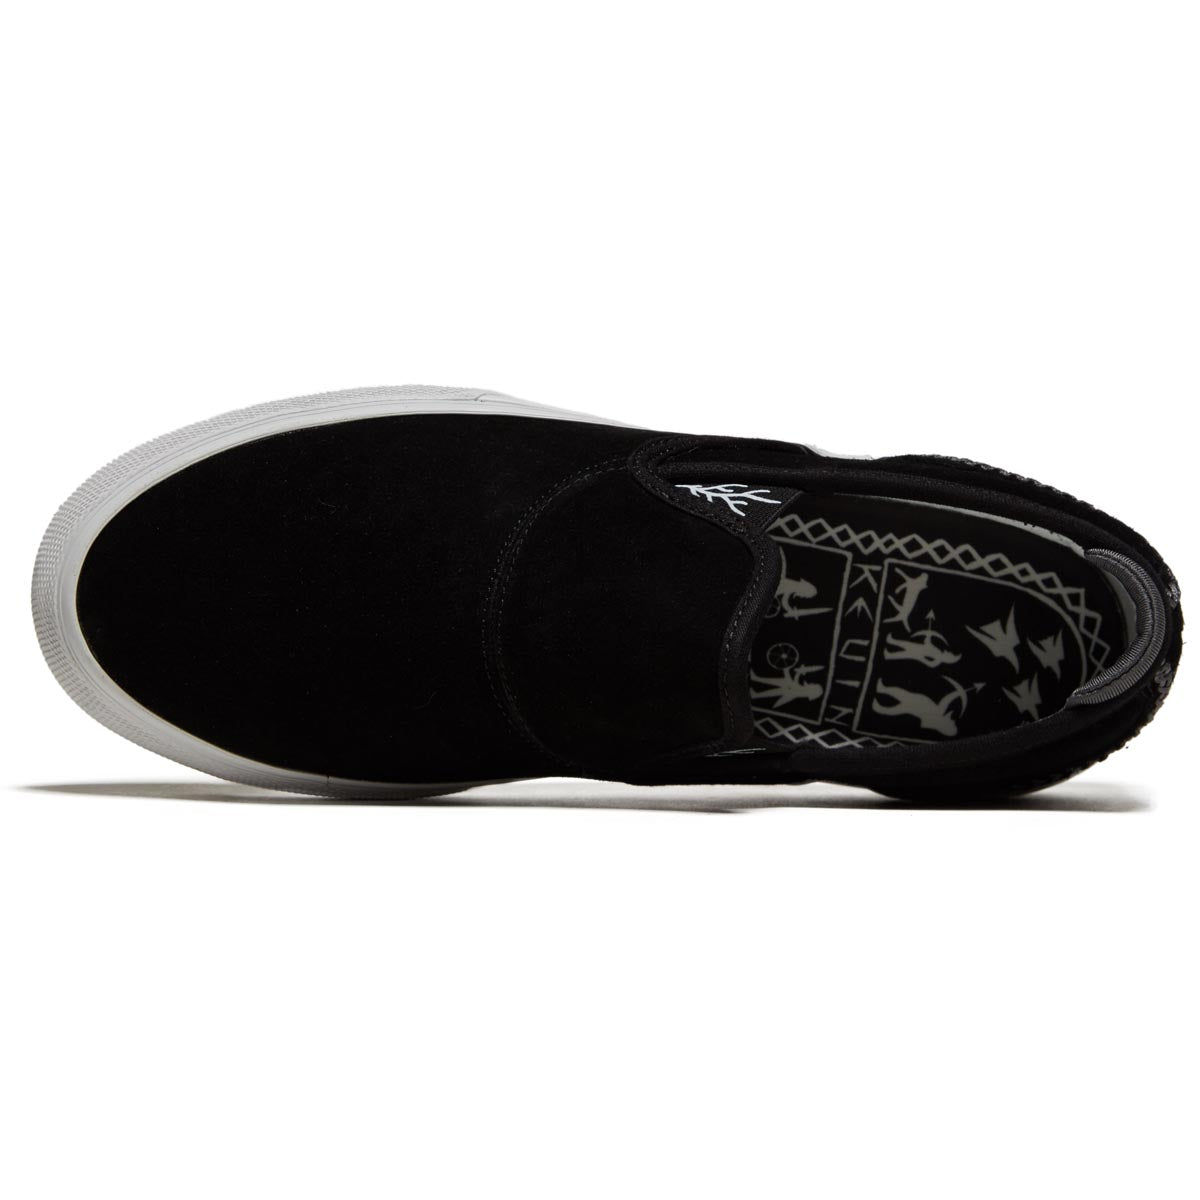 Emerica Wino G6 Slip-on Shoes - Black/White/White image 3